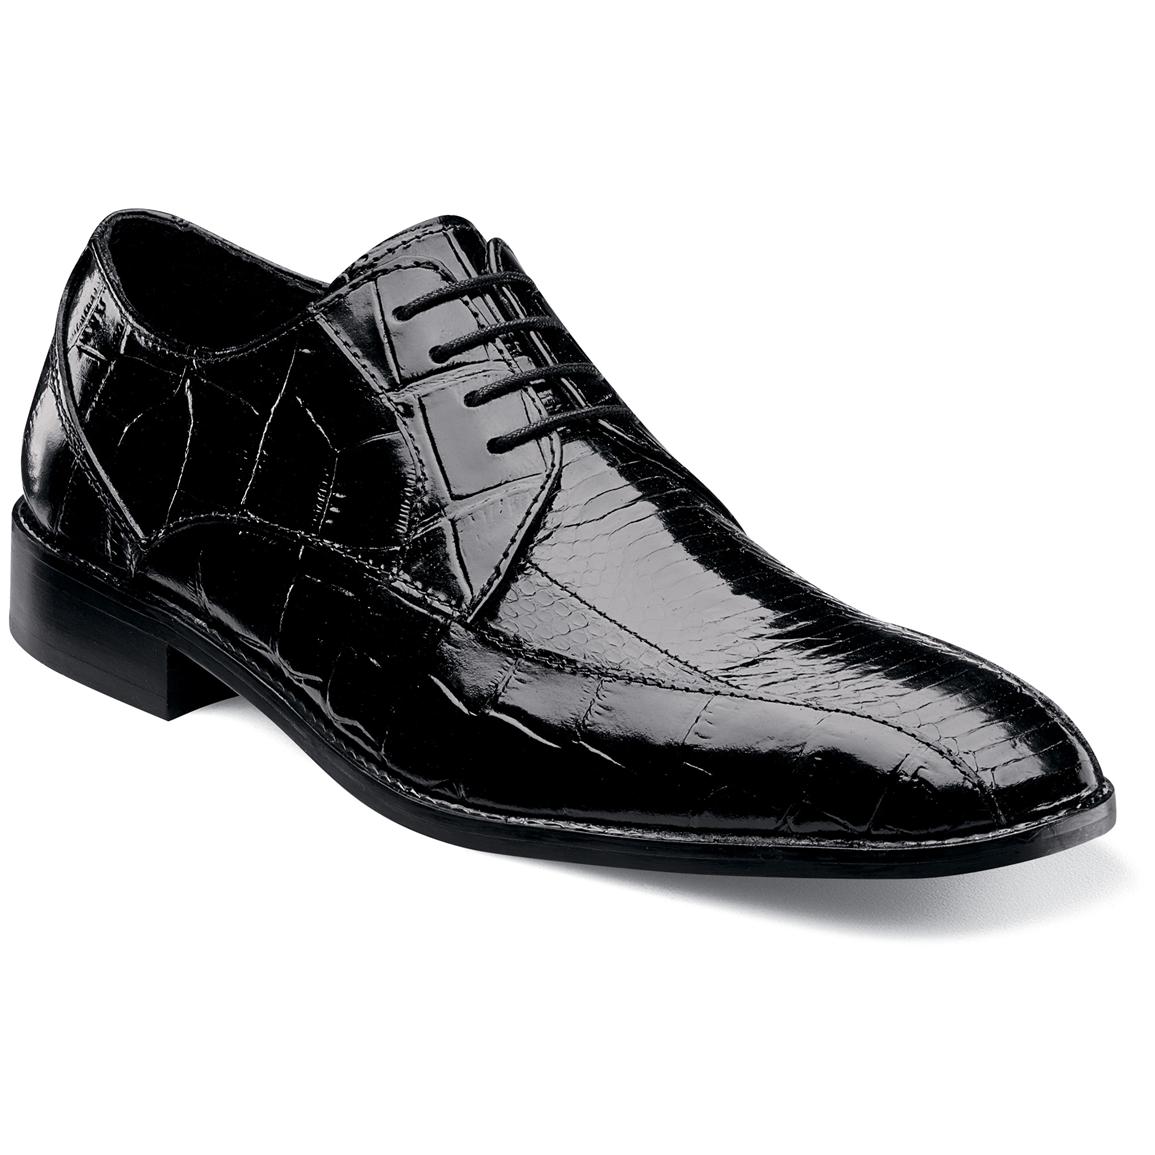 Men's Stacy Adams® Picard Shoes - 582305, Dress Shoes at Sportsman's Guide